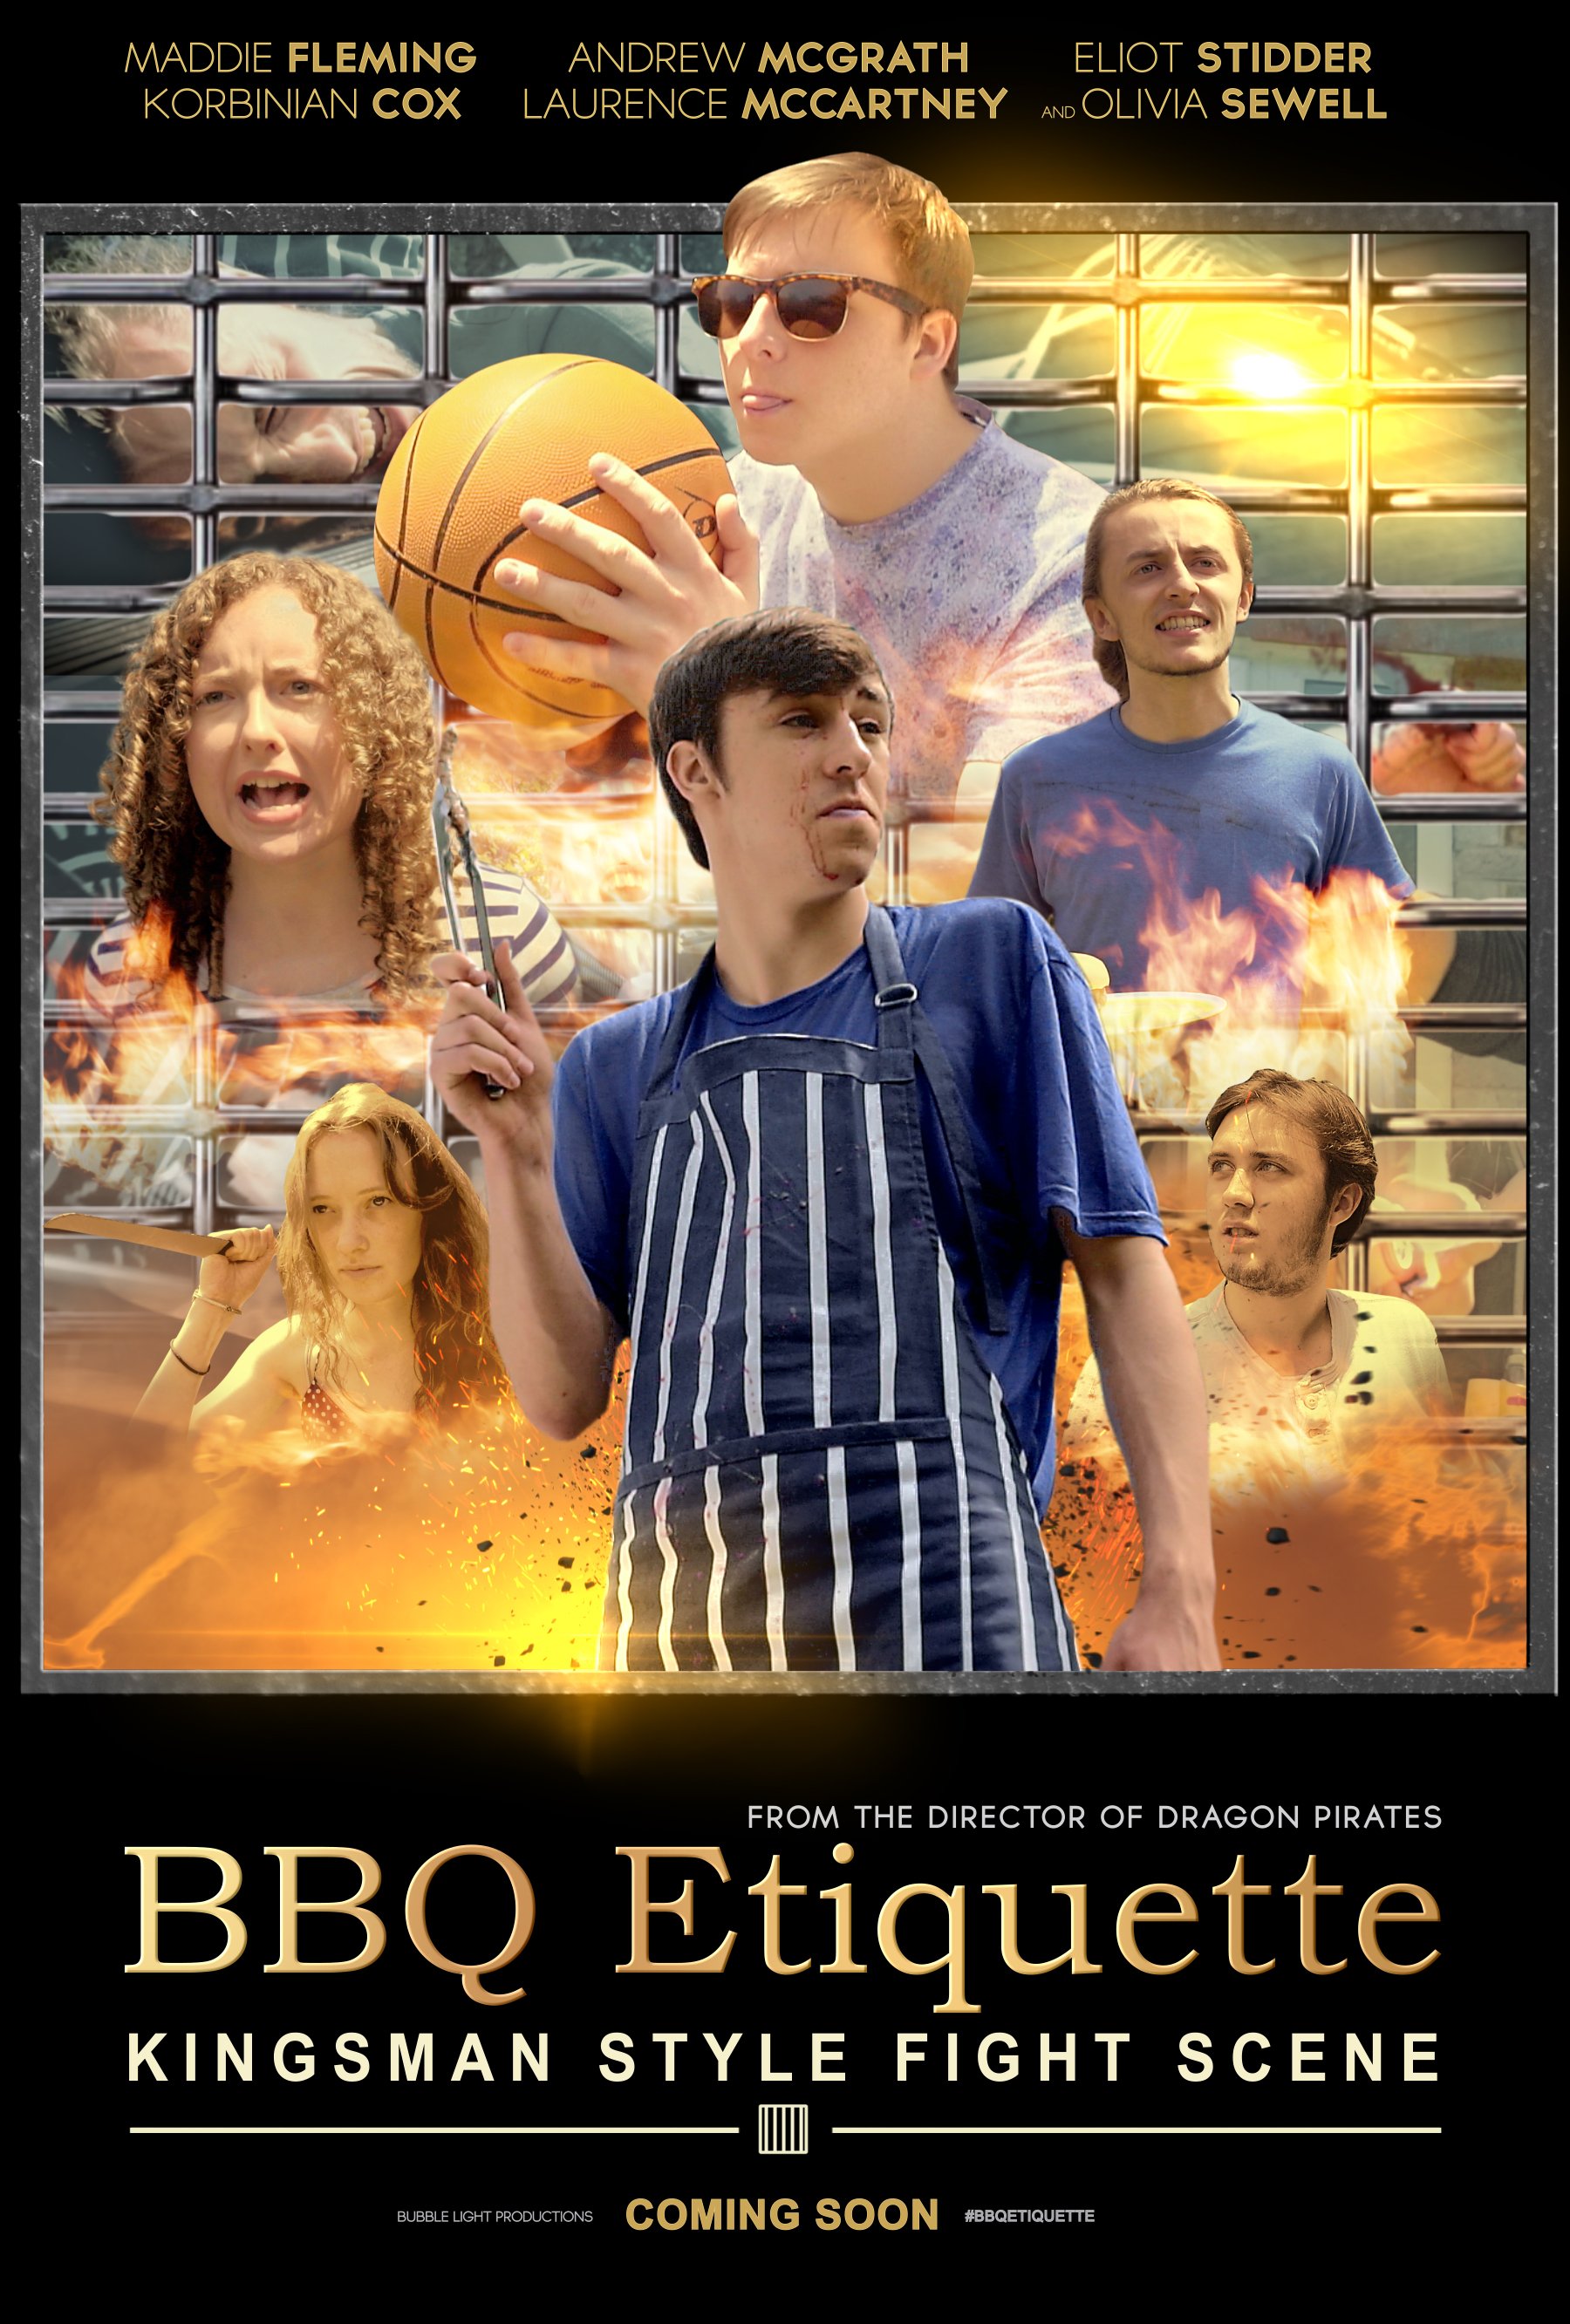 bbq-etiquette-main-poster-4.jpg